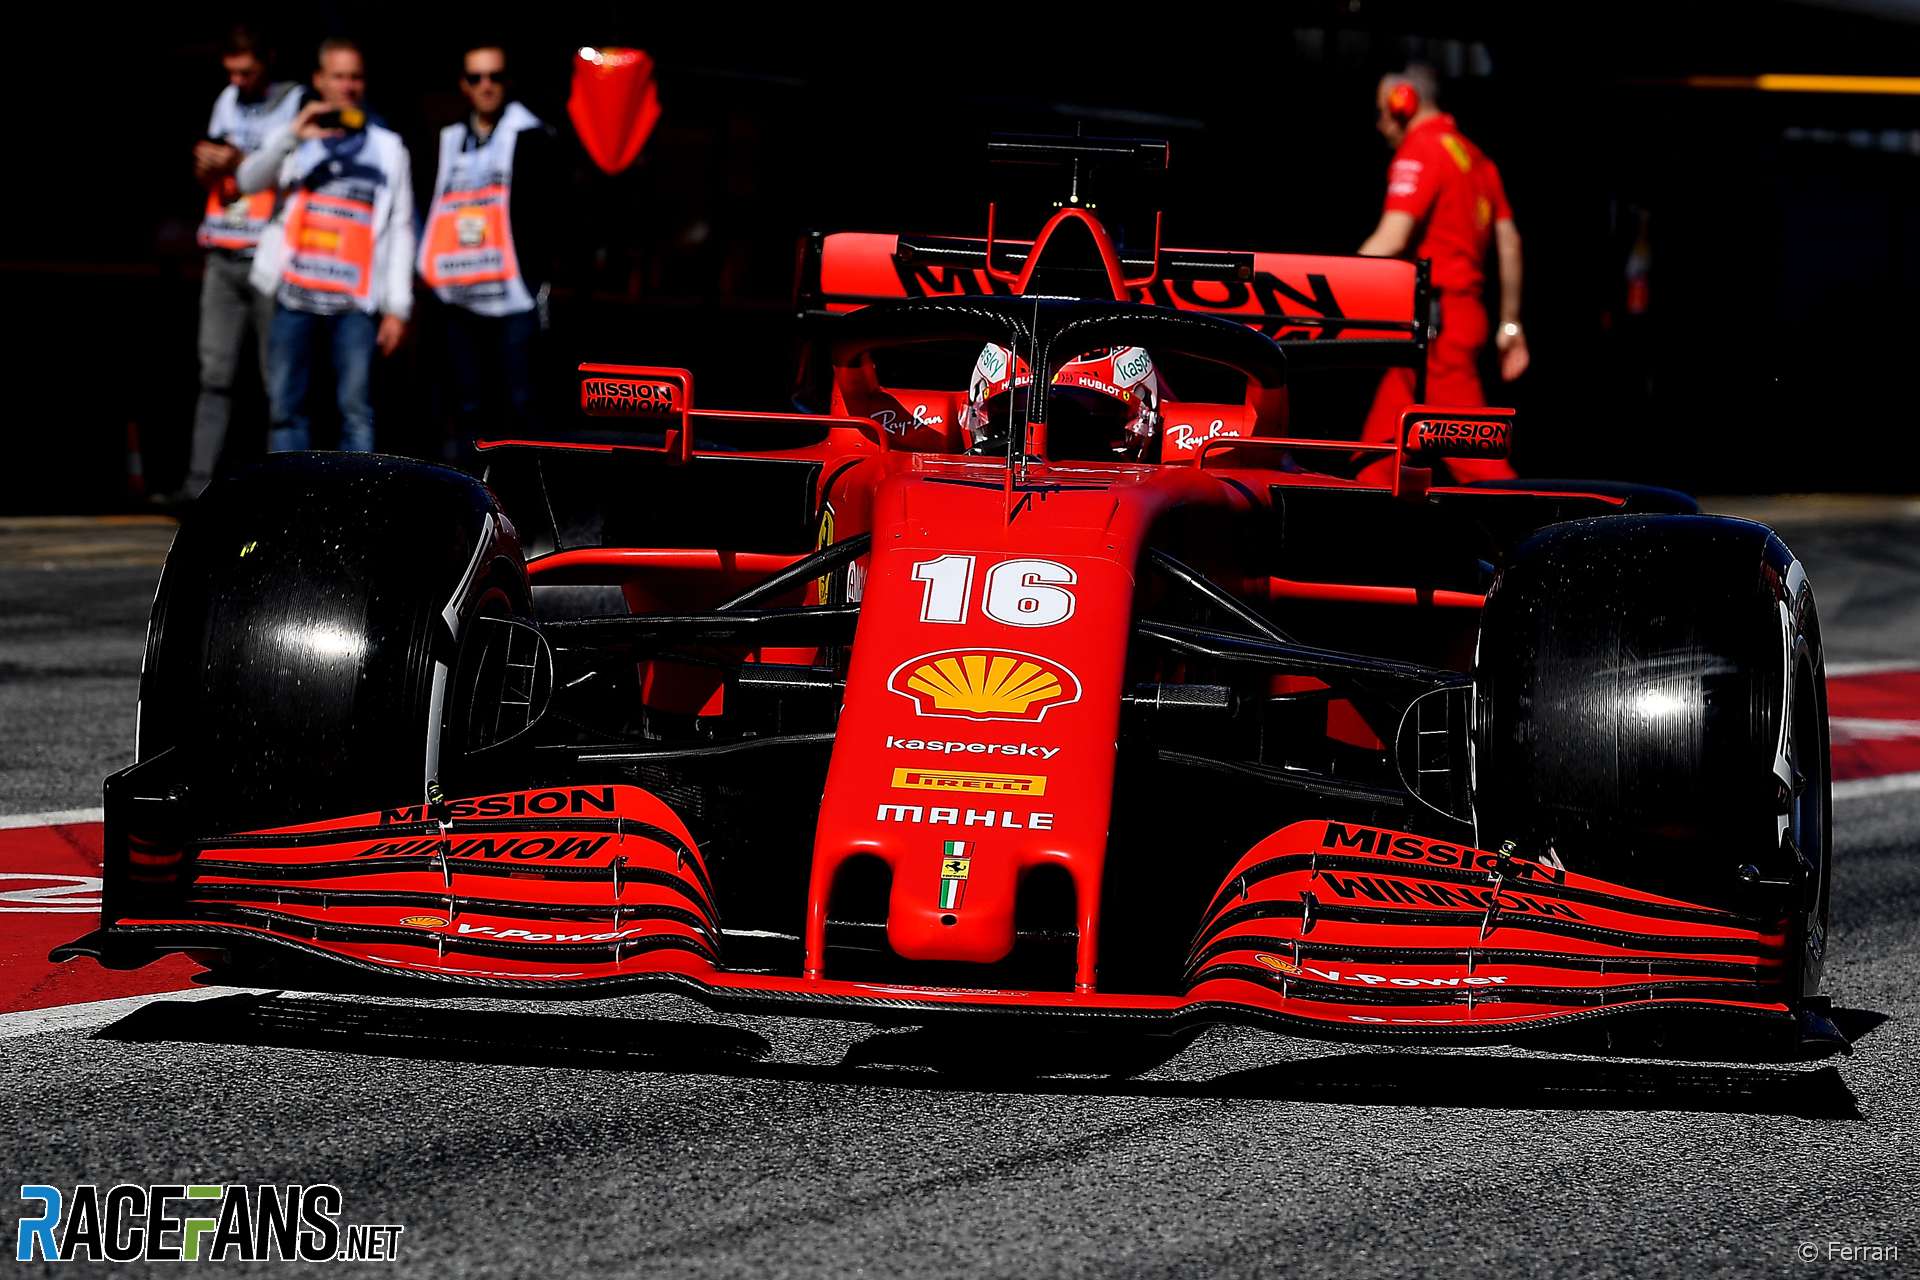 Charles Leclerc, Ferrari, Circuit de Catalunya, 2020